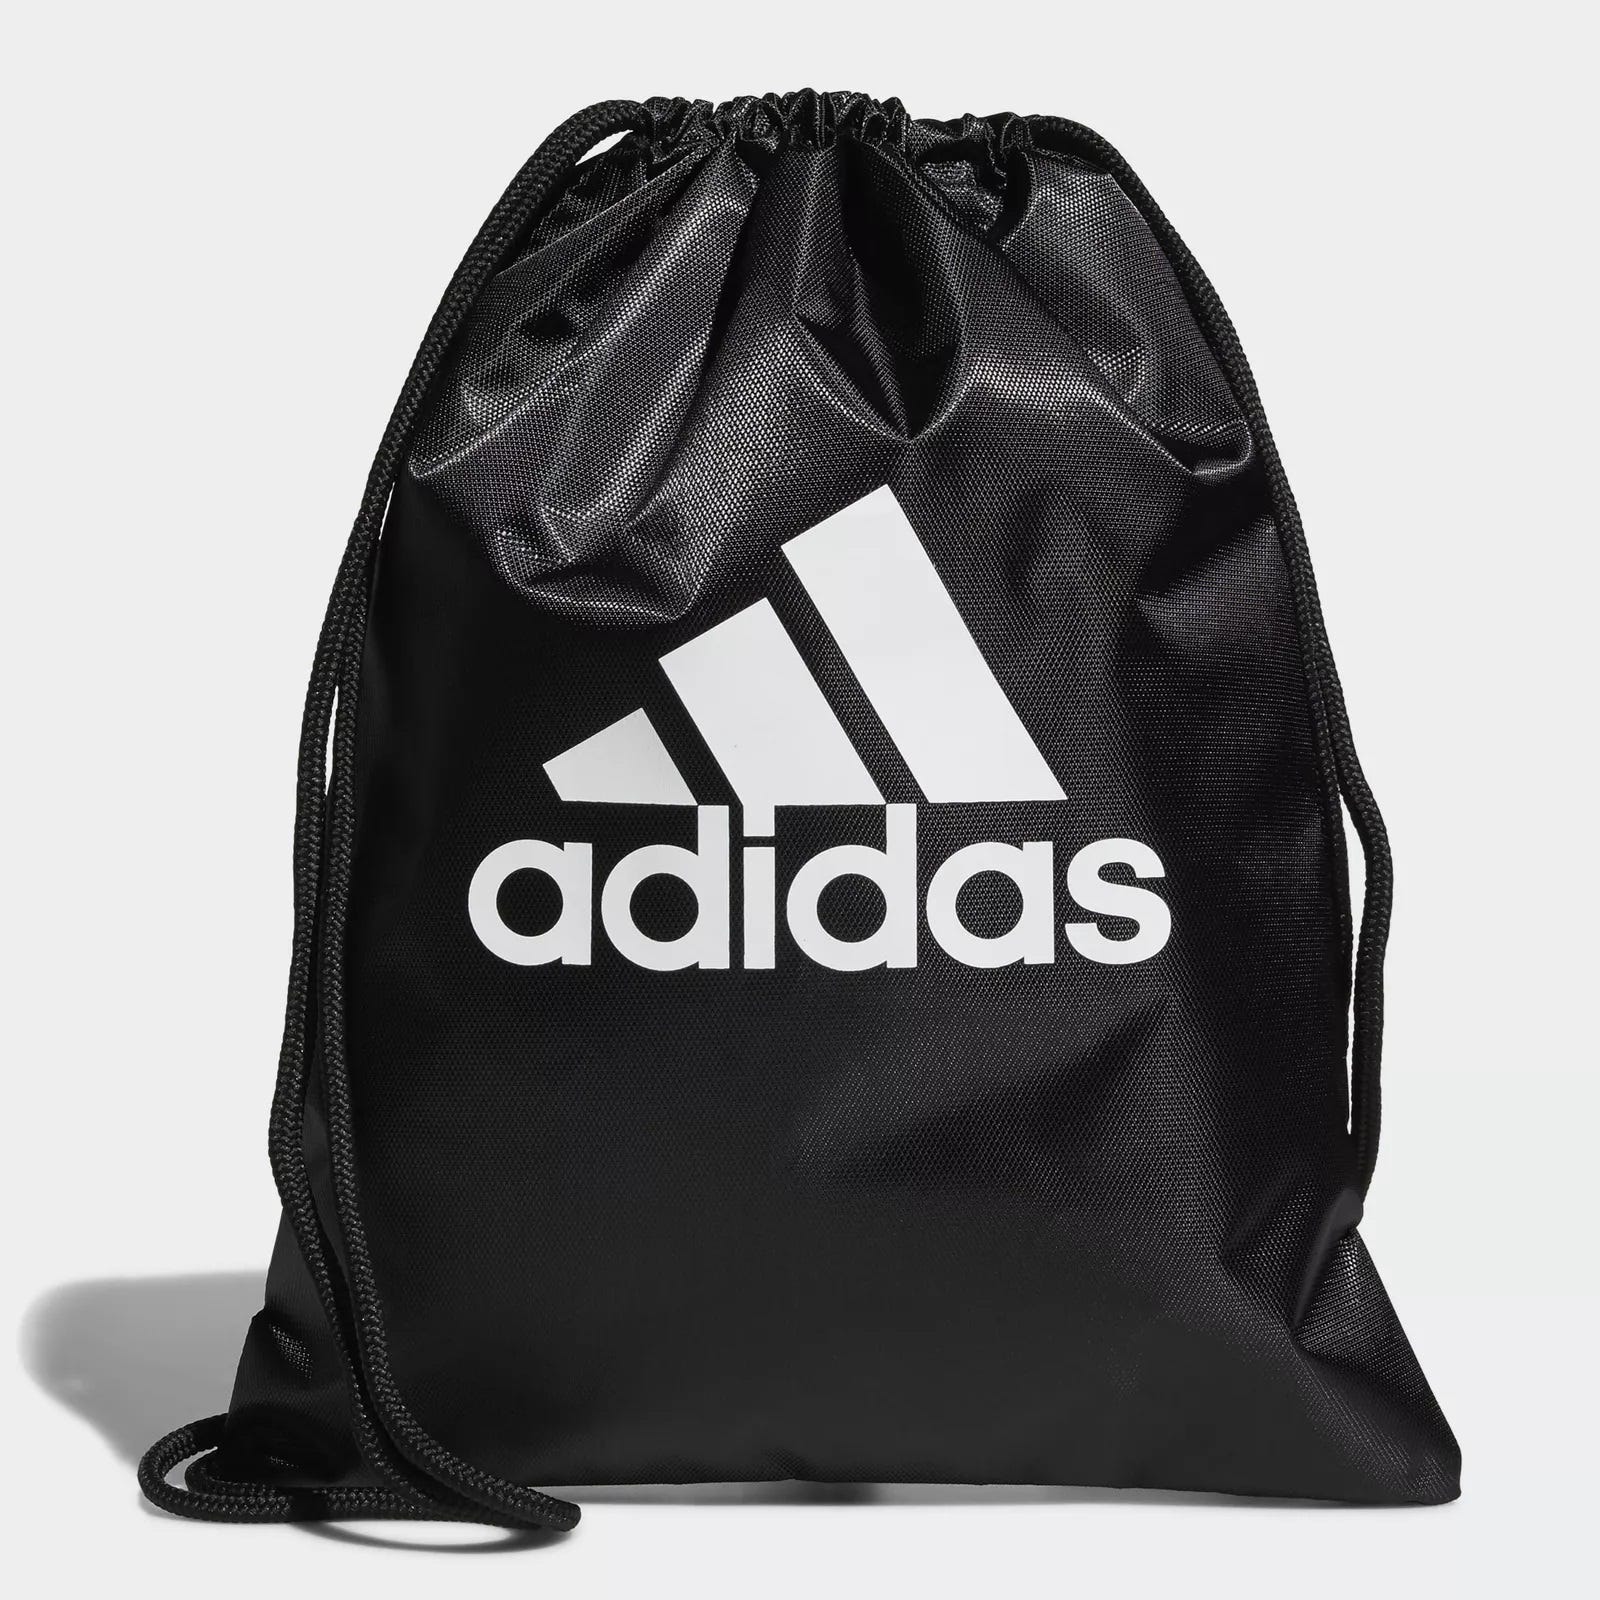 Black Adidas drawstring bag with white logo.